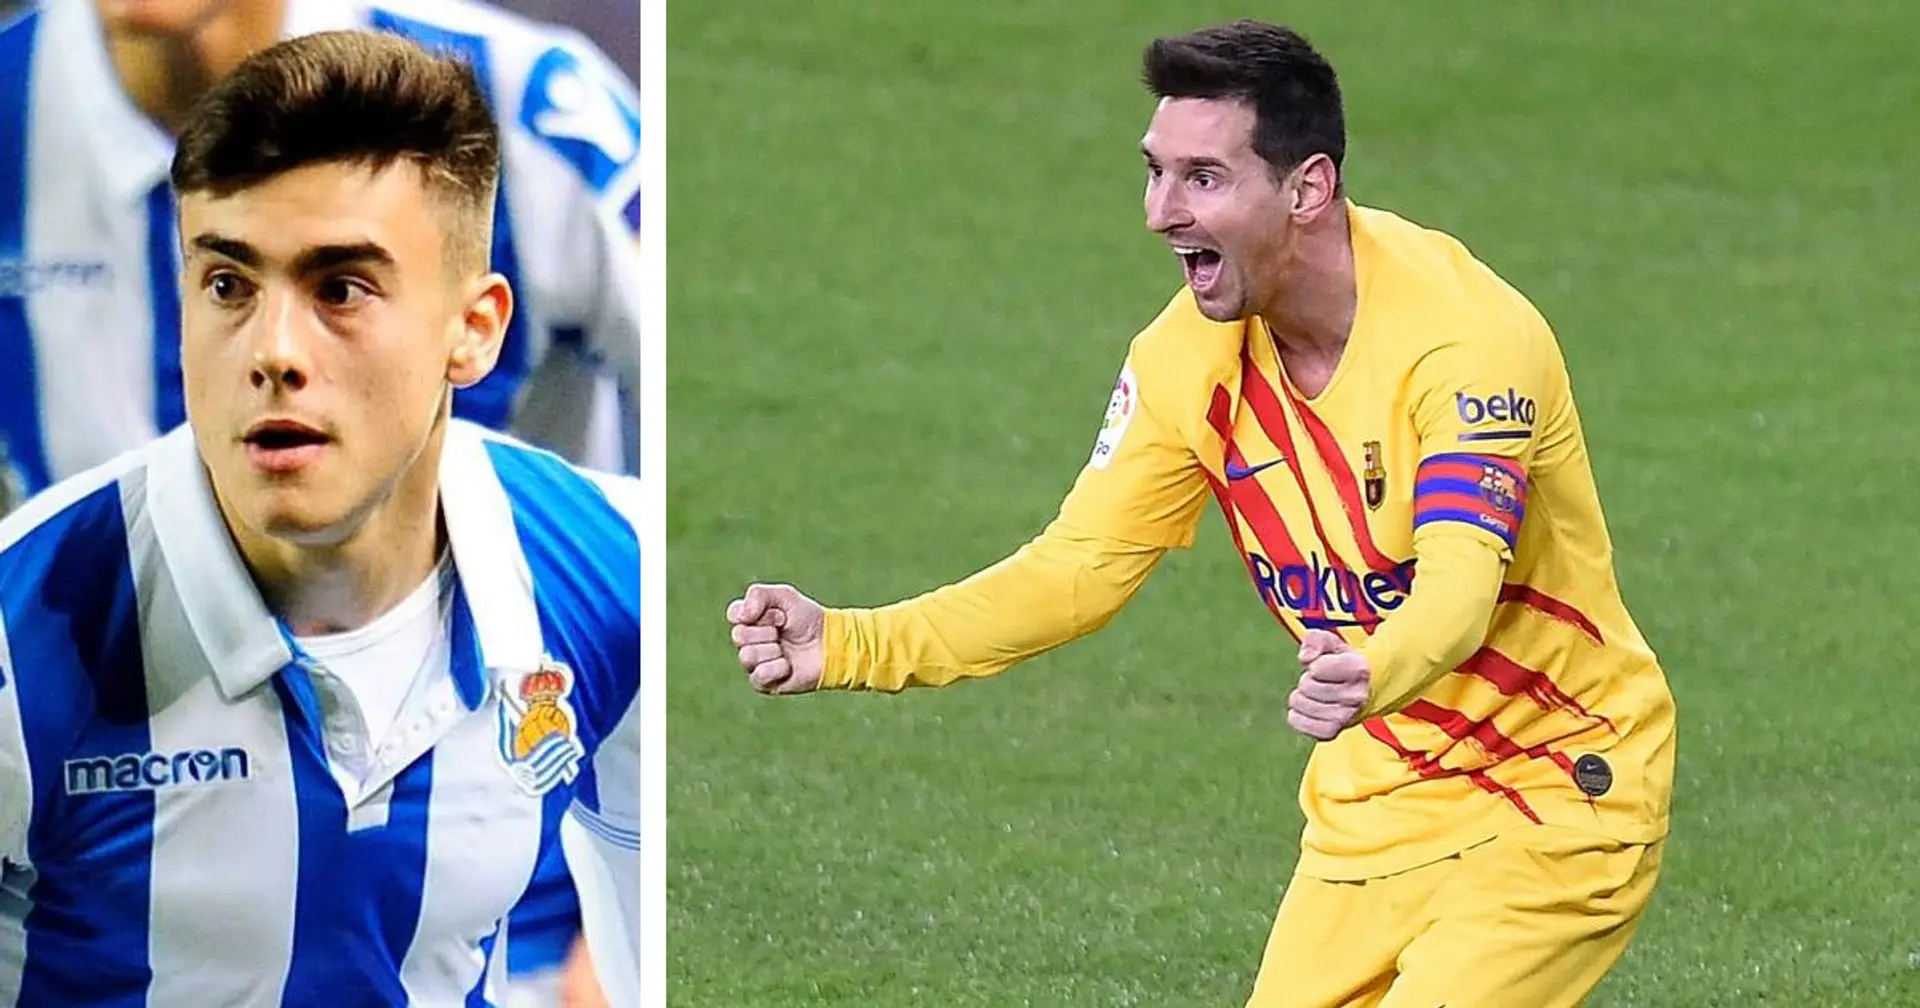 L'attaquant de la Real Sociedad Barrenetxea: ''Je pense que c'est une blague lorsqu'ils disent que Messi est fini, c'est absurde"